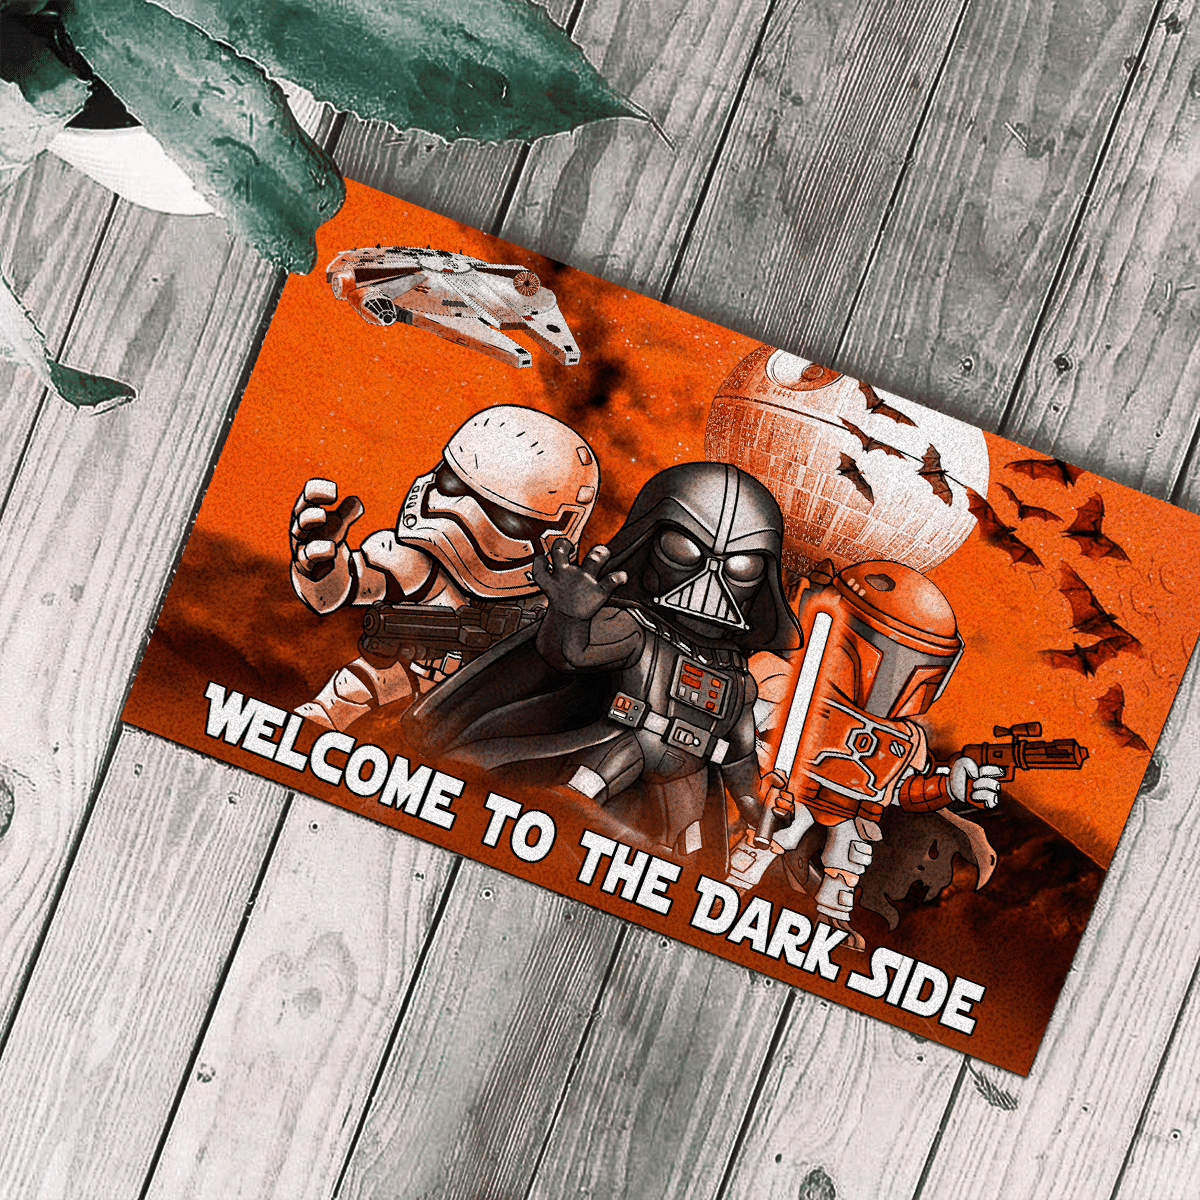 Star Wars Darth Vader Stormtrooper Boba Fett Welcome to the dark side doormat 8